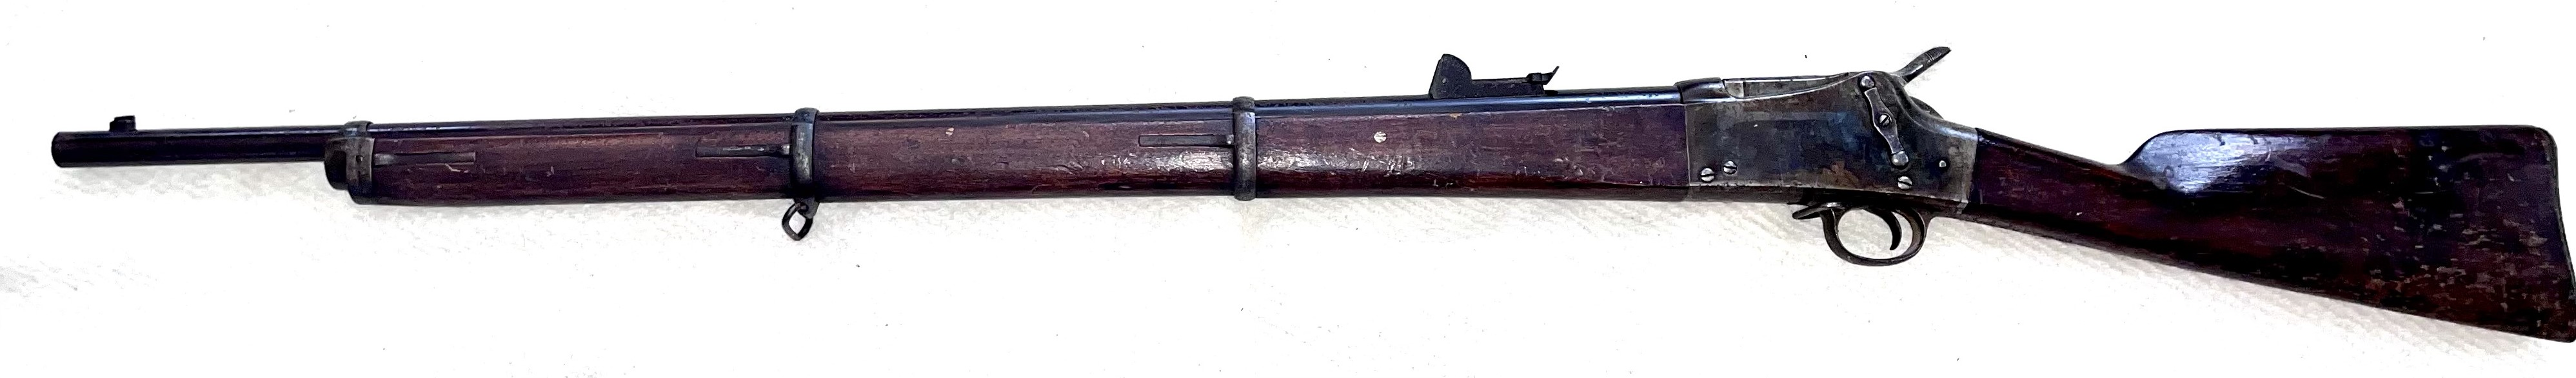 ./guns/rifle/bilder/Rifle-CJV-Krag-Petersson-M1876-1879-750-1.jpg